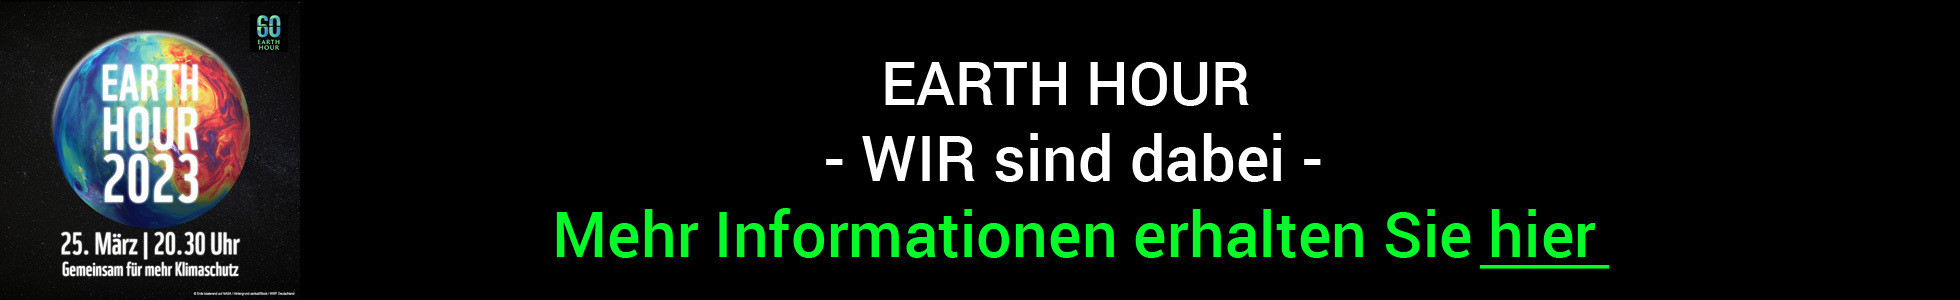 Earth Hour BadDepot.de